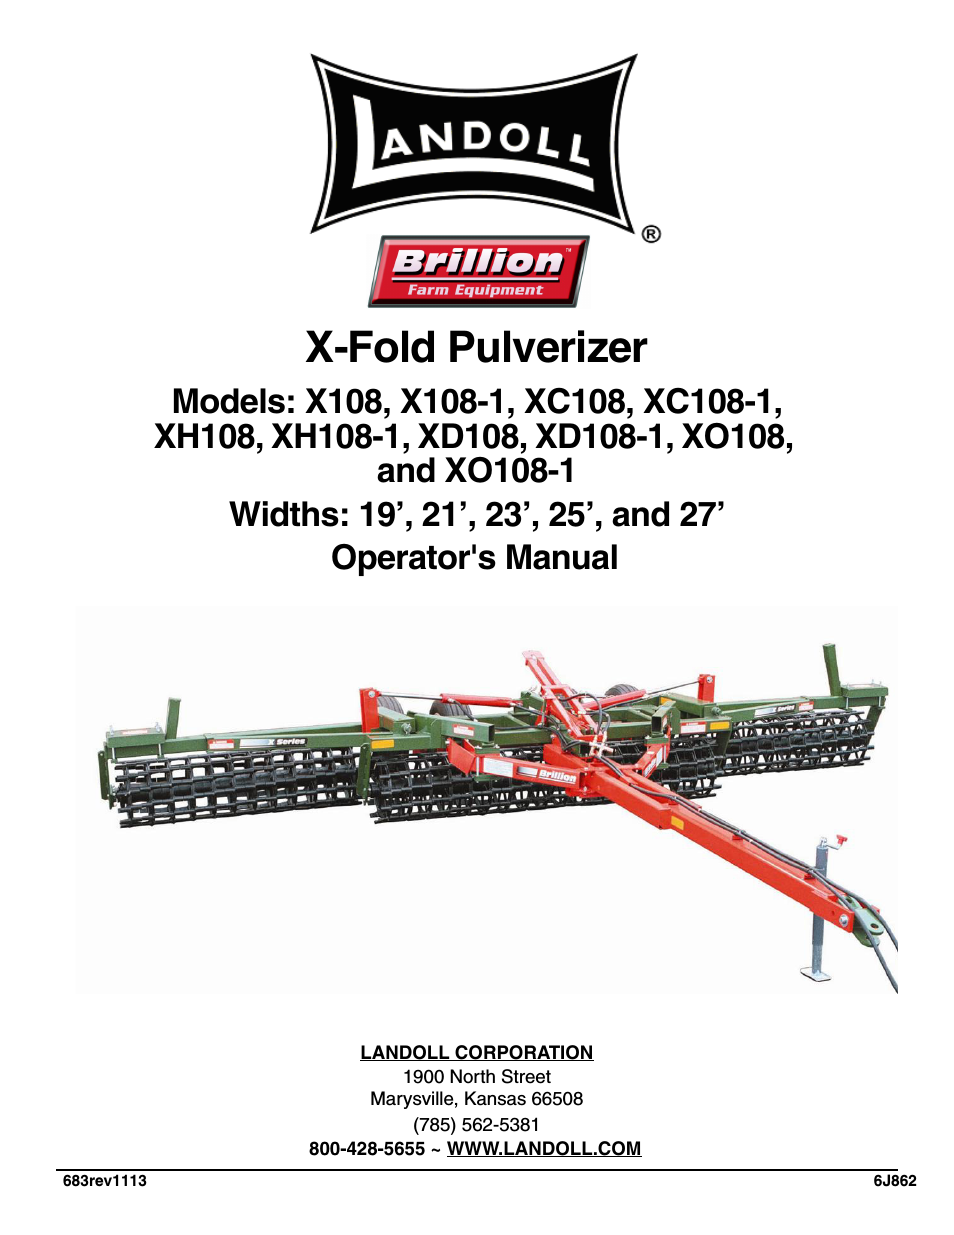 XO108/XO108-1 X-Fold Pulverizer